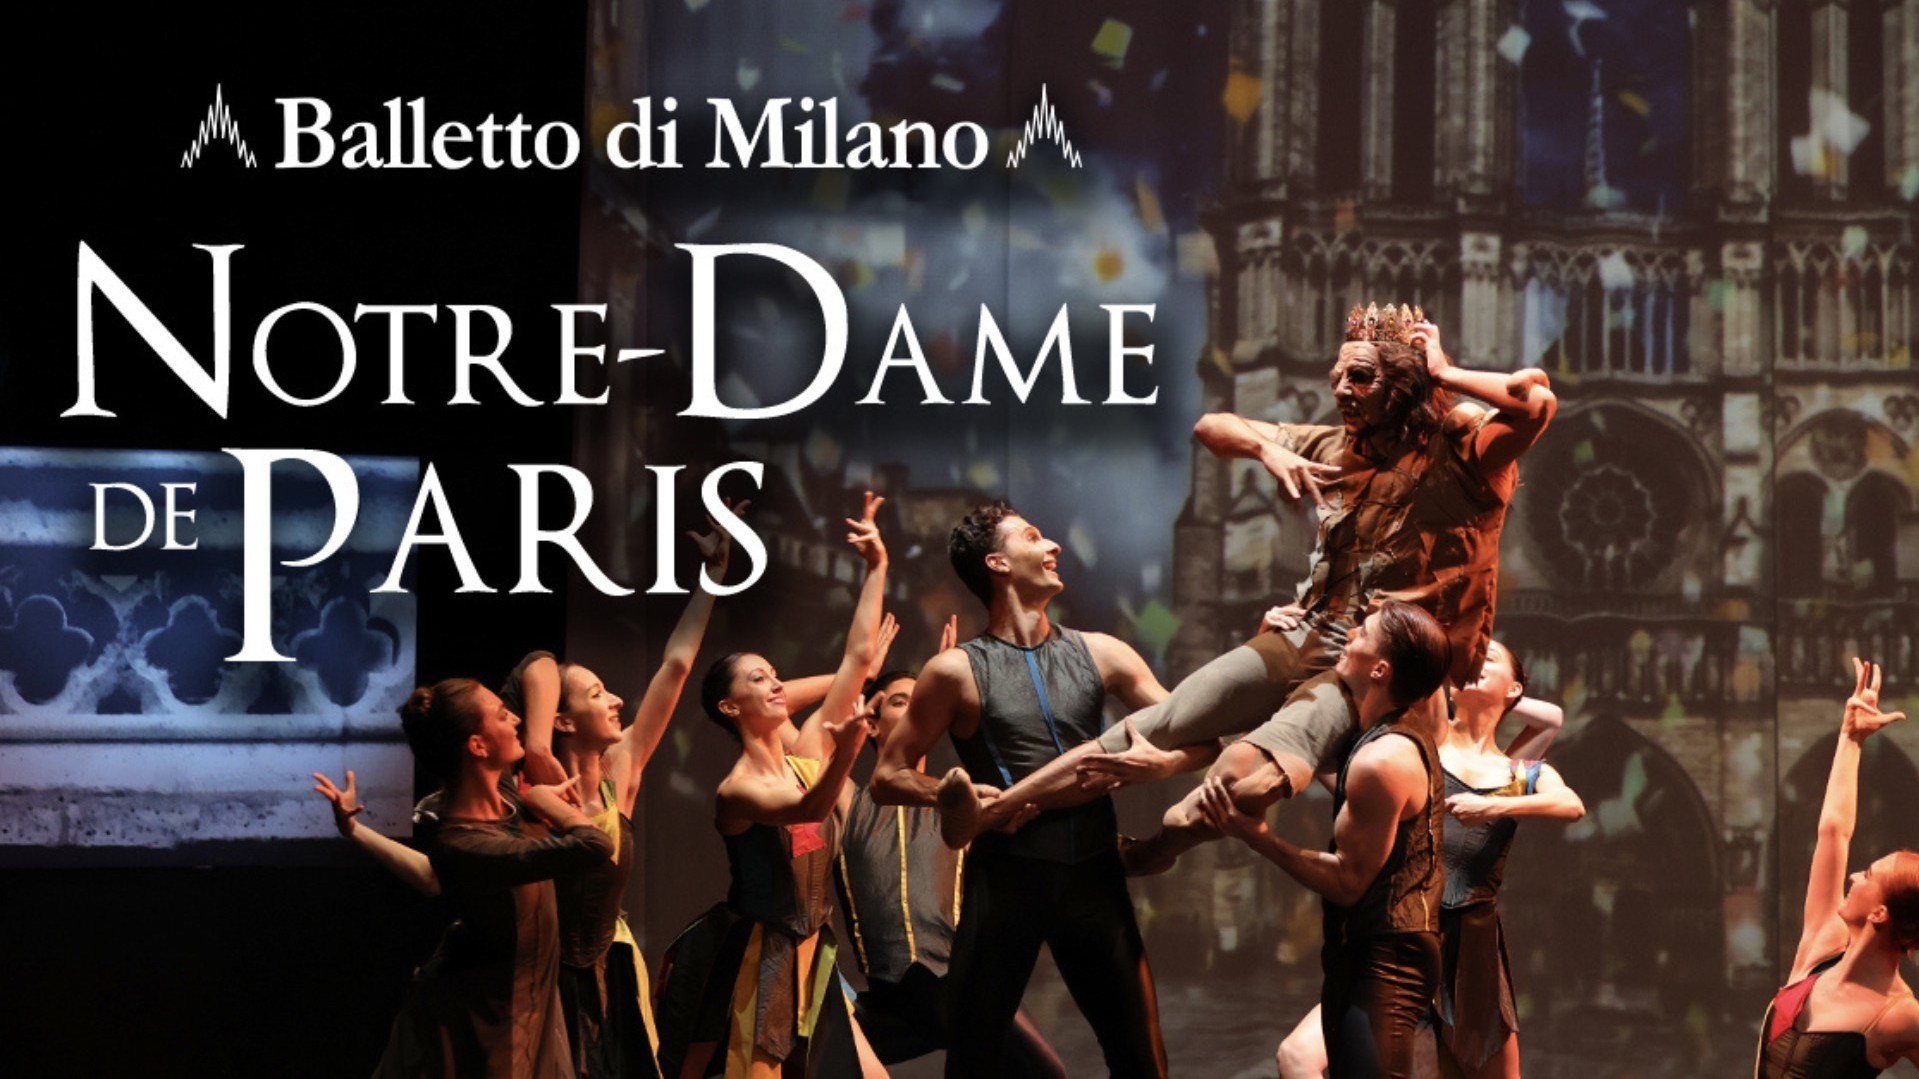 Notre-dame de Paris - Balletto di Milano